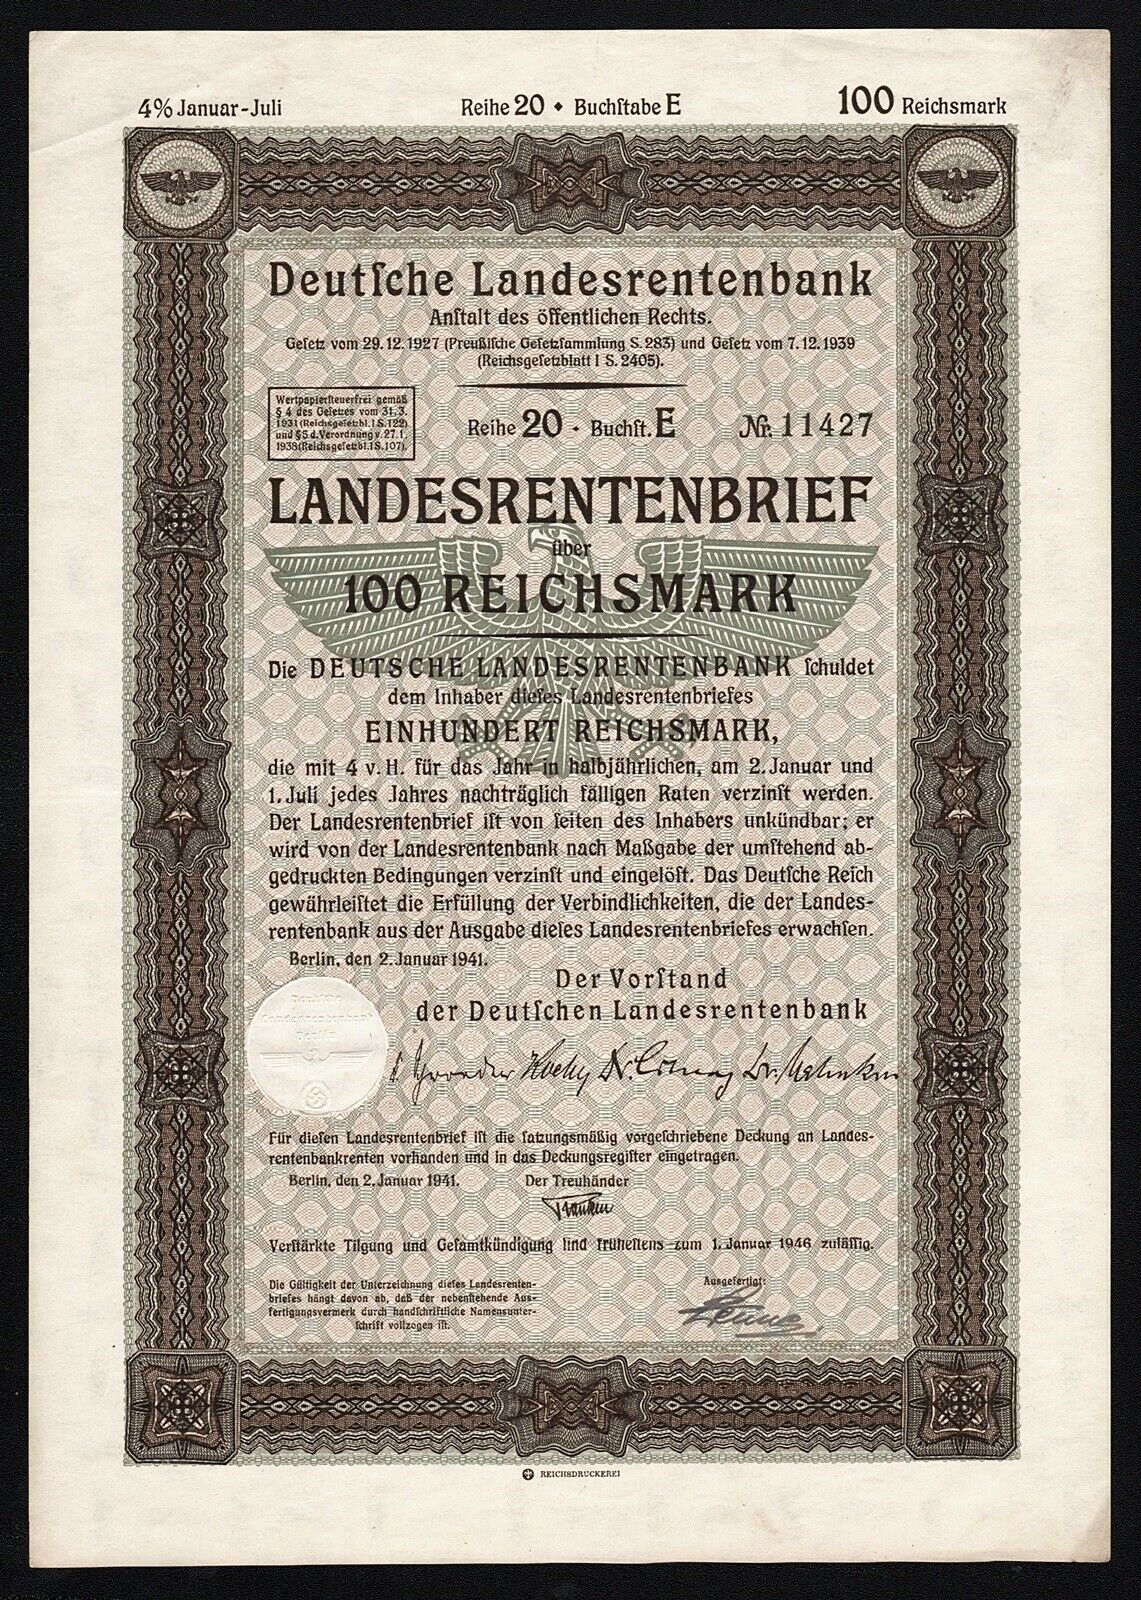 1941 Germany: Deutsche Landesrentenbank, Landesrentenbrief, 100 Rm, Uncancelled